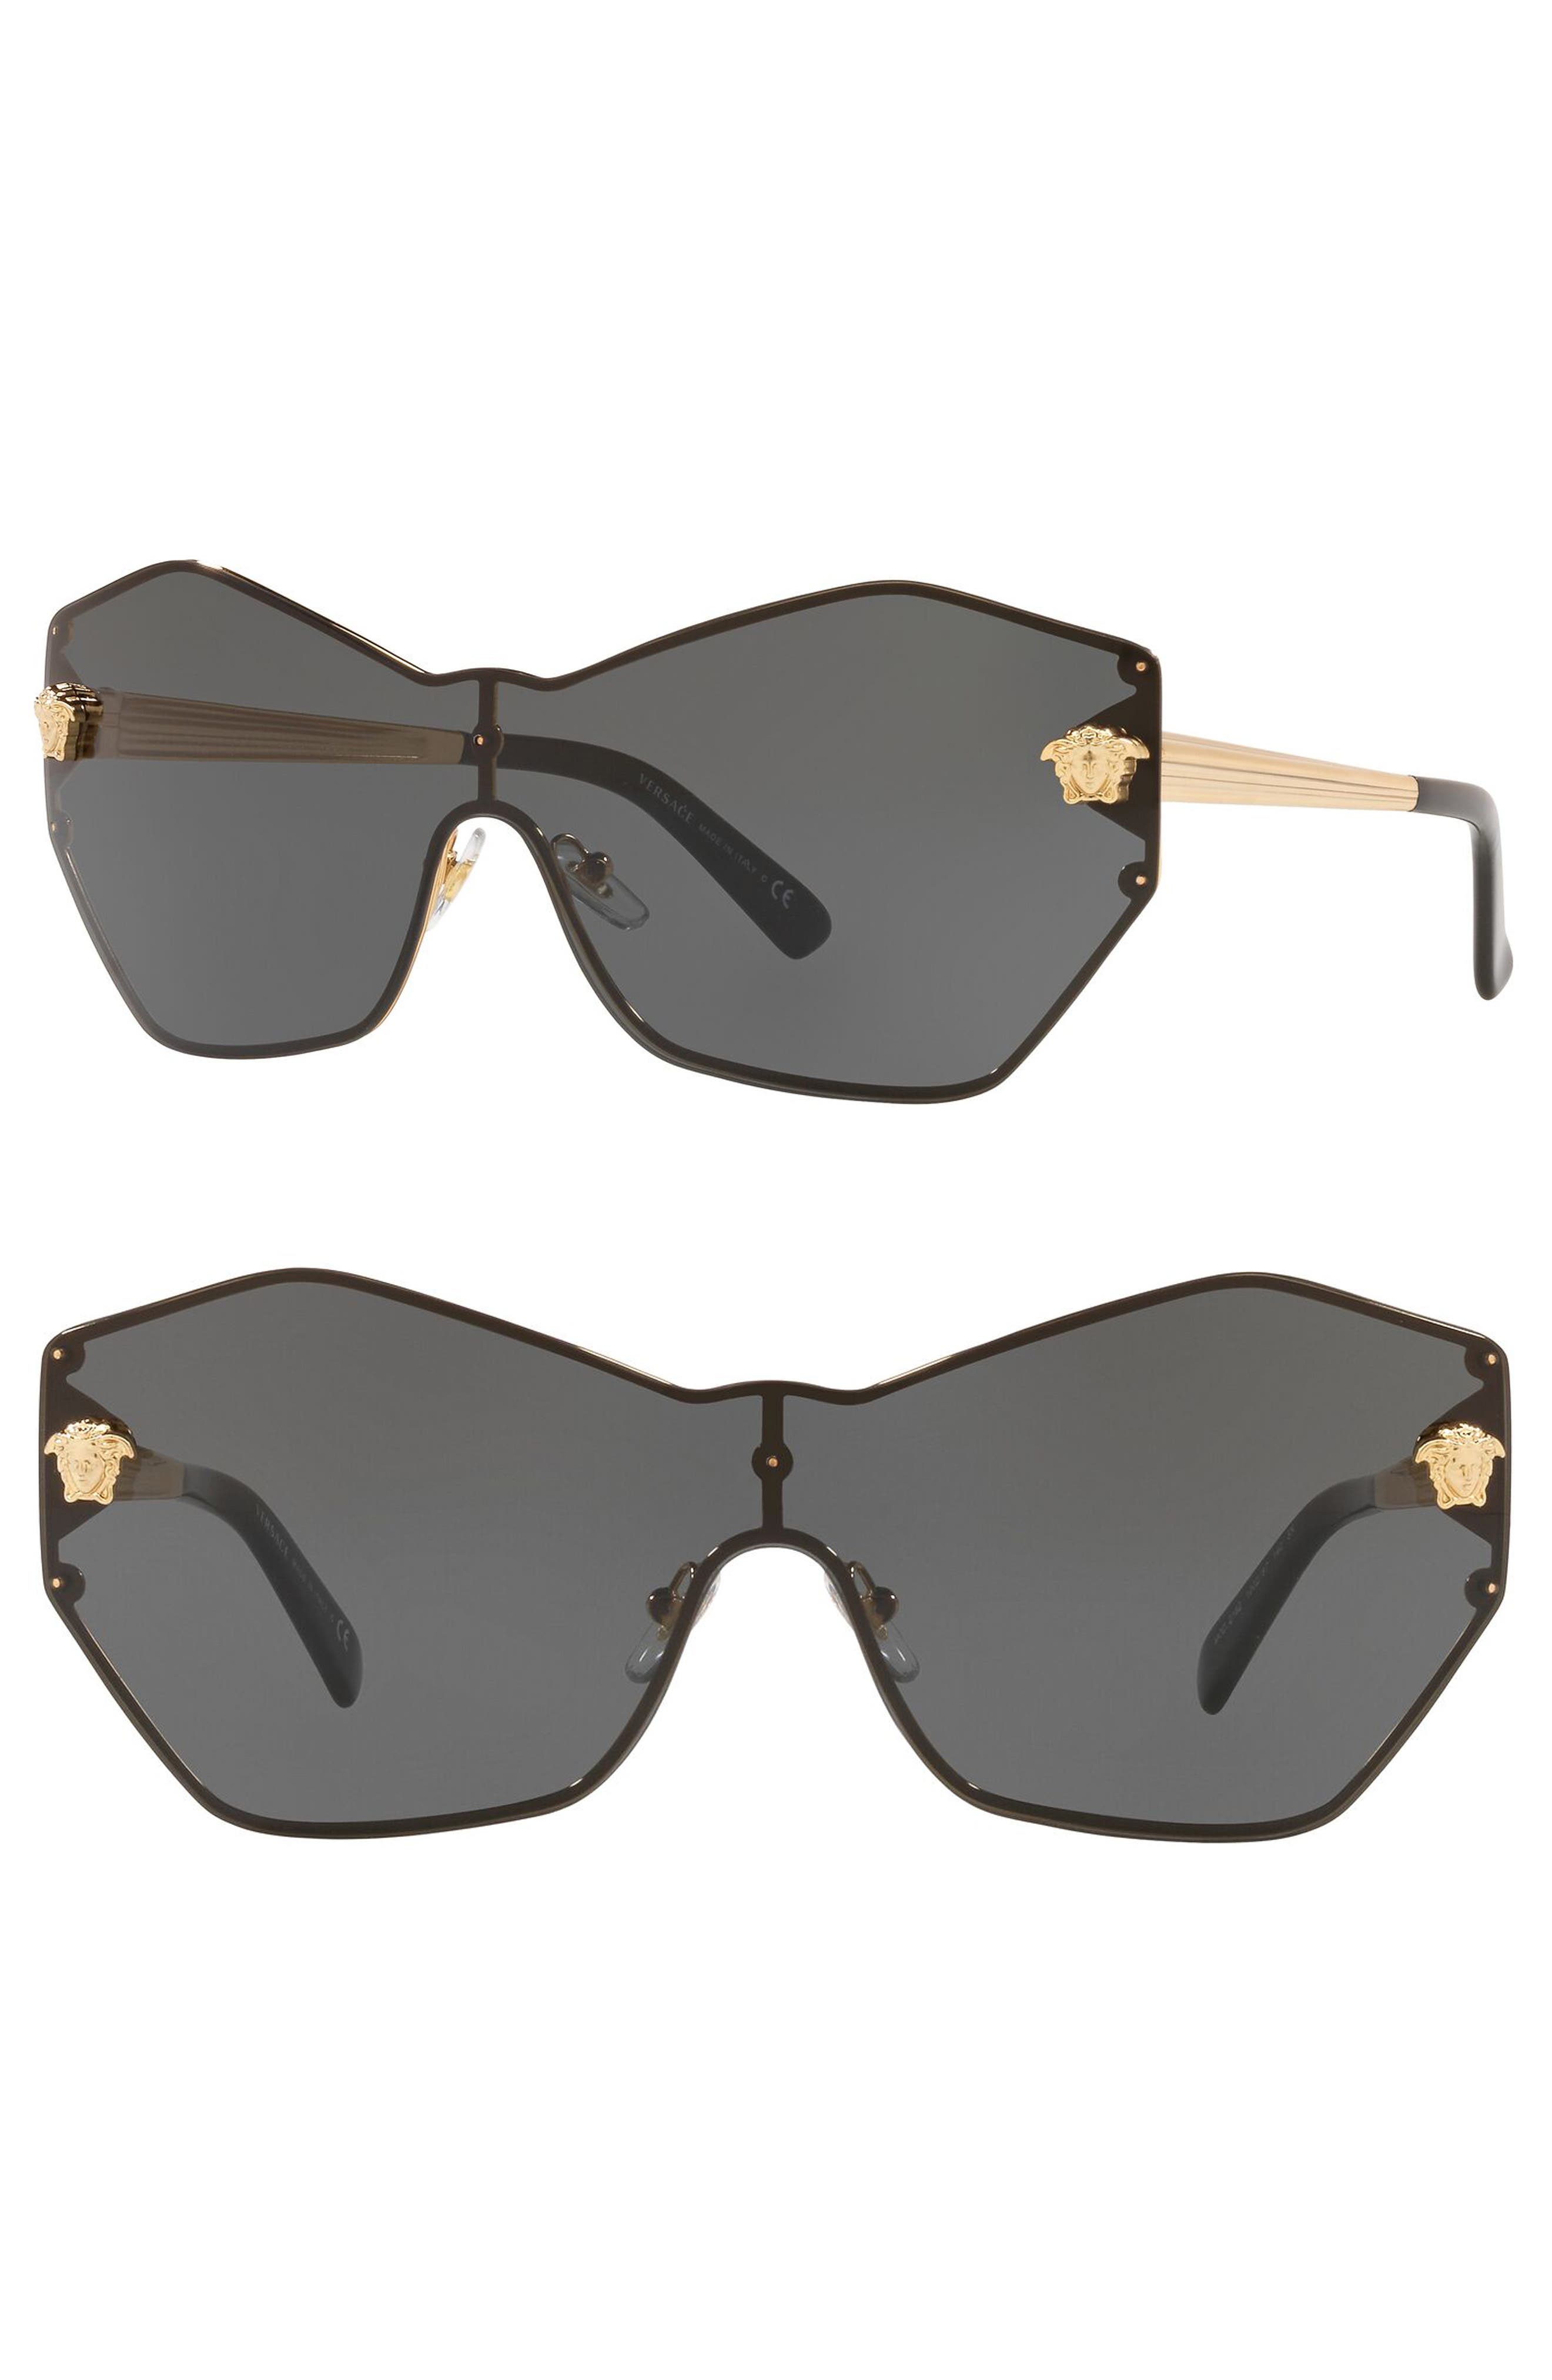 versace women's sunglasses sale